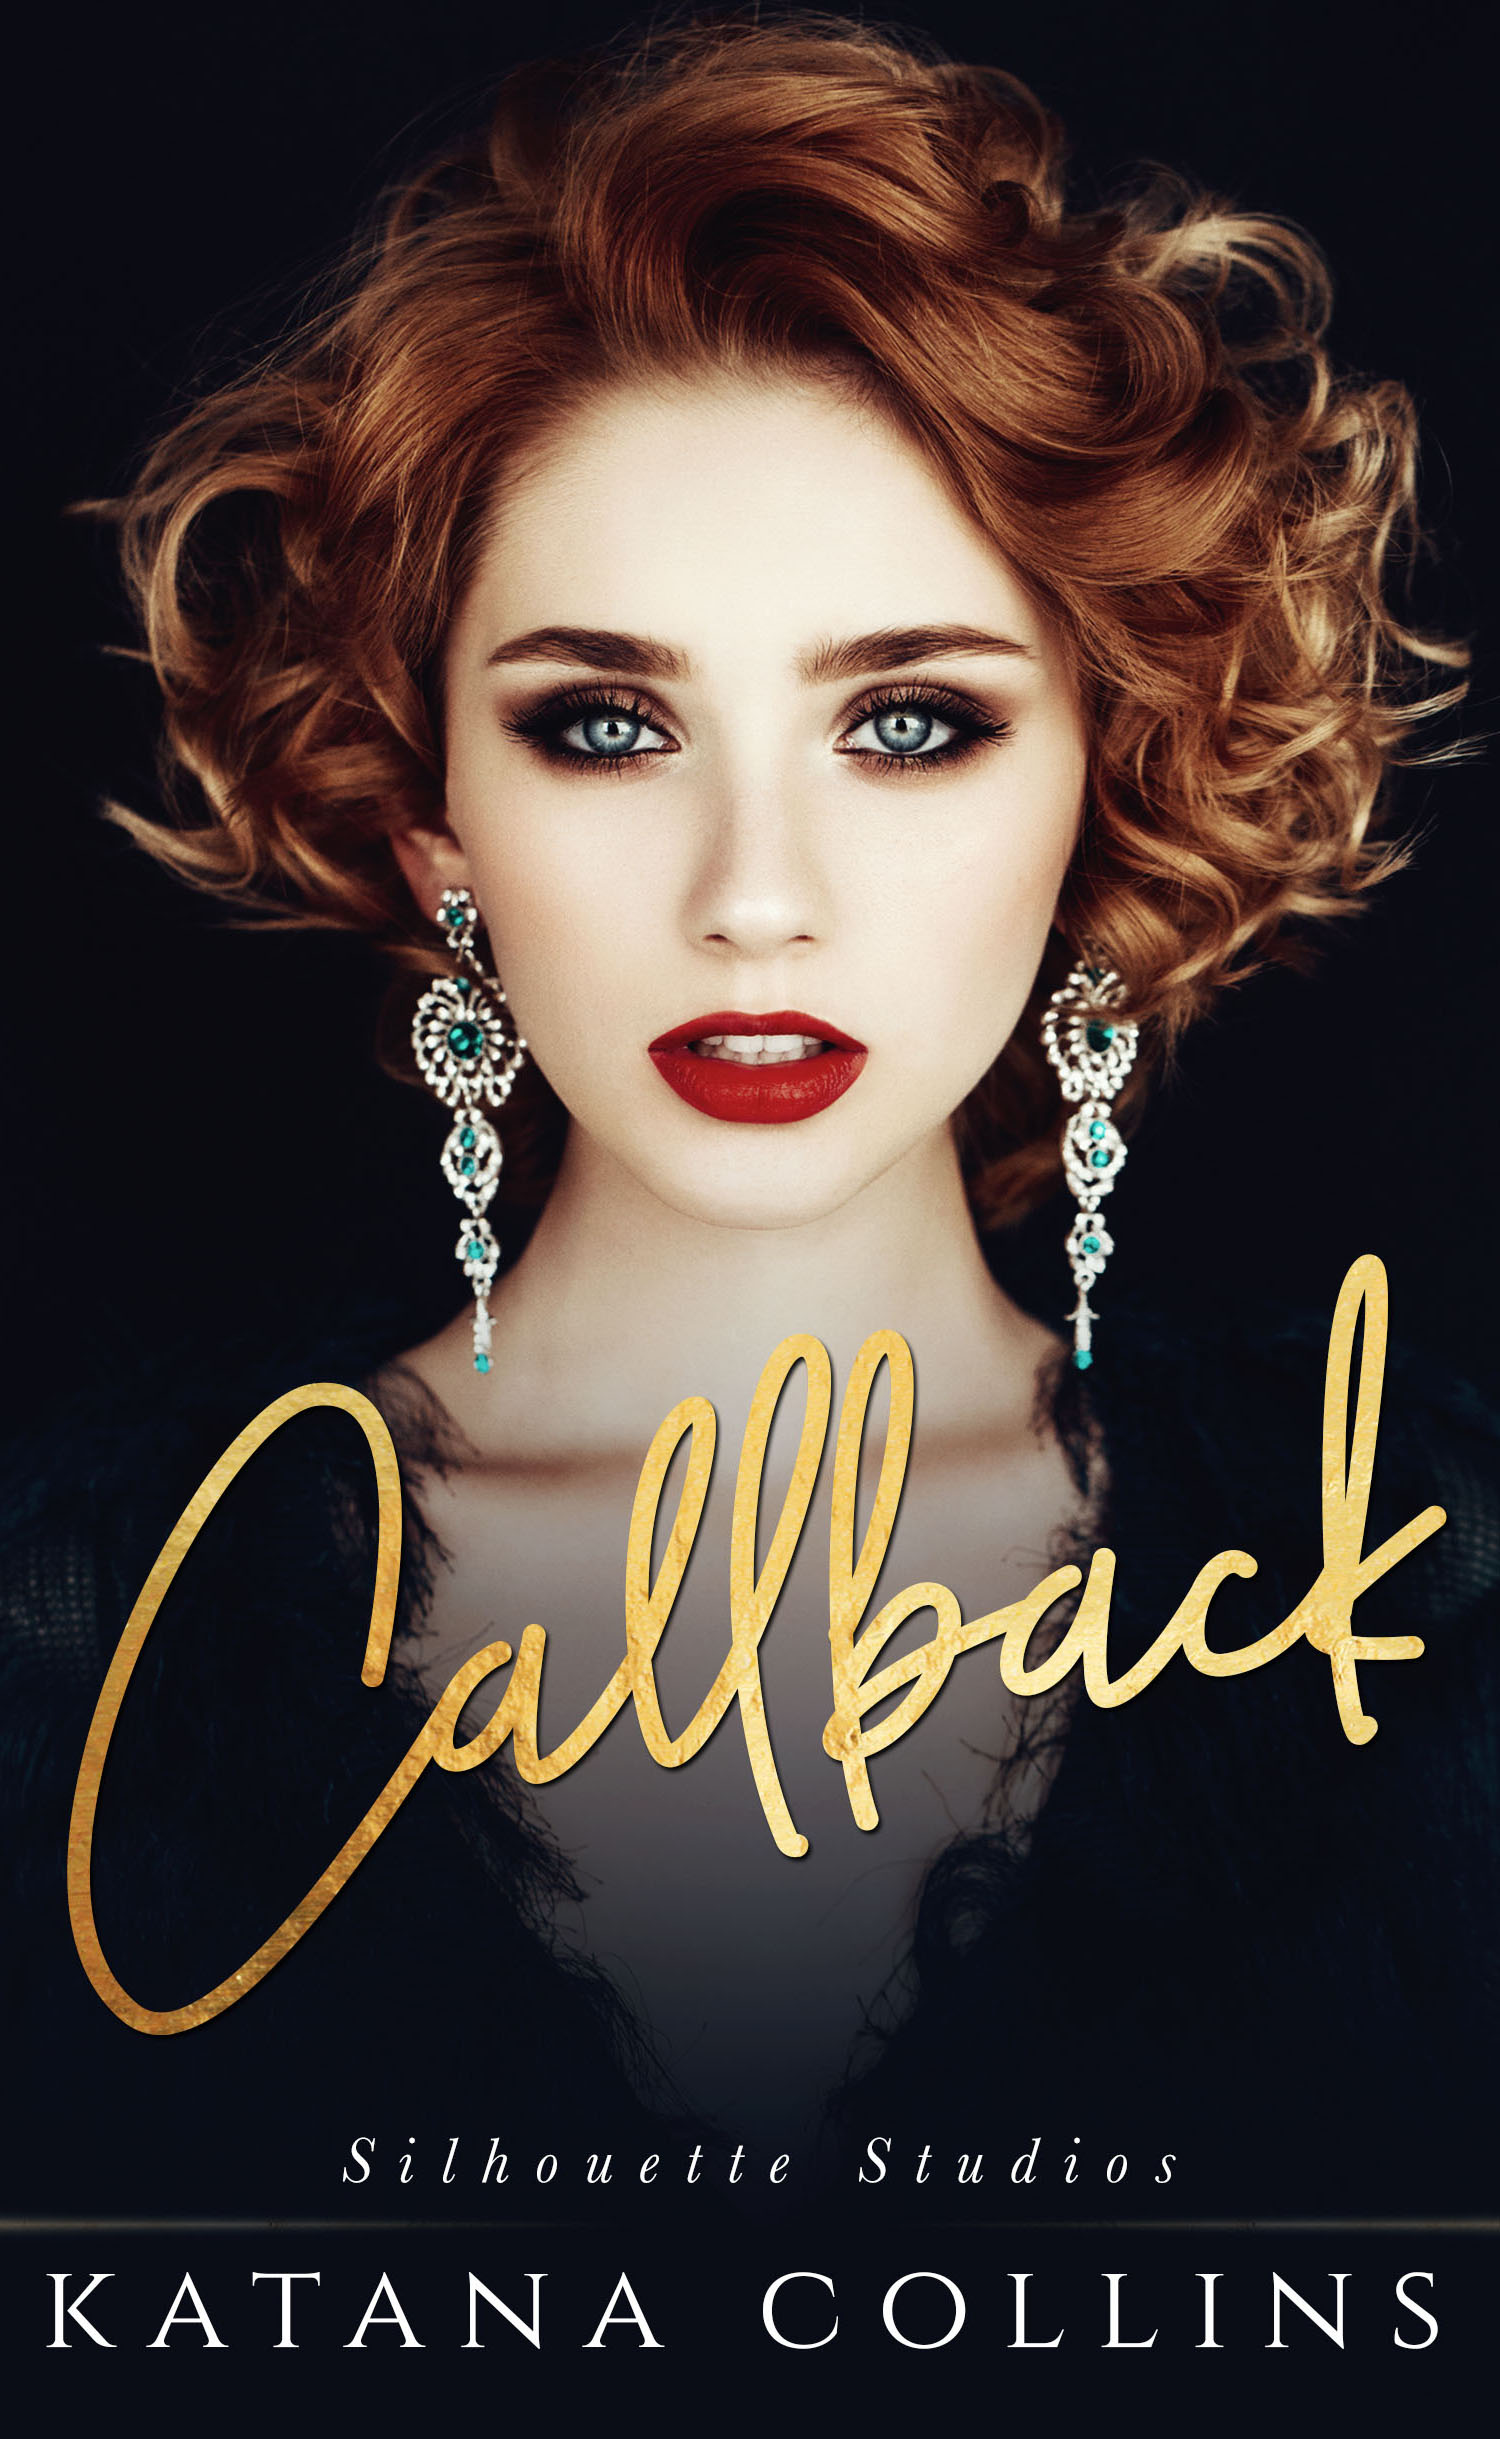 Callback by Katana Collins